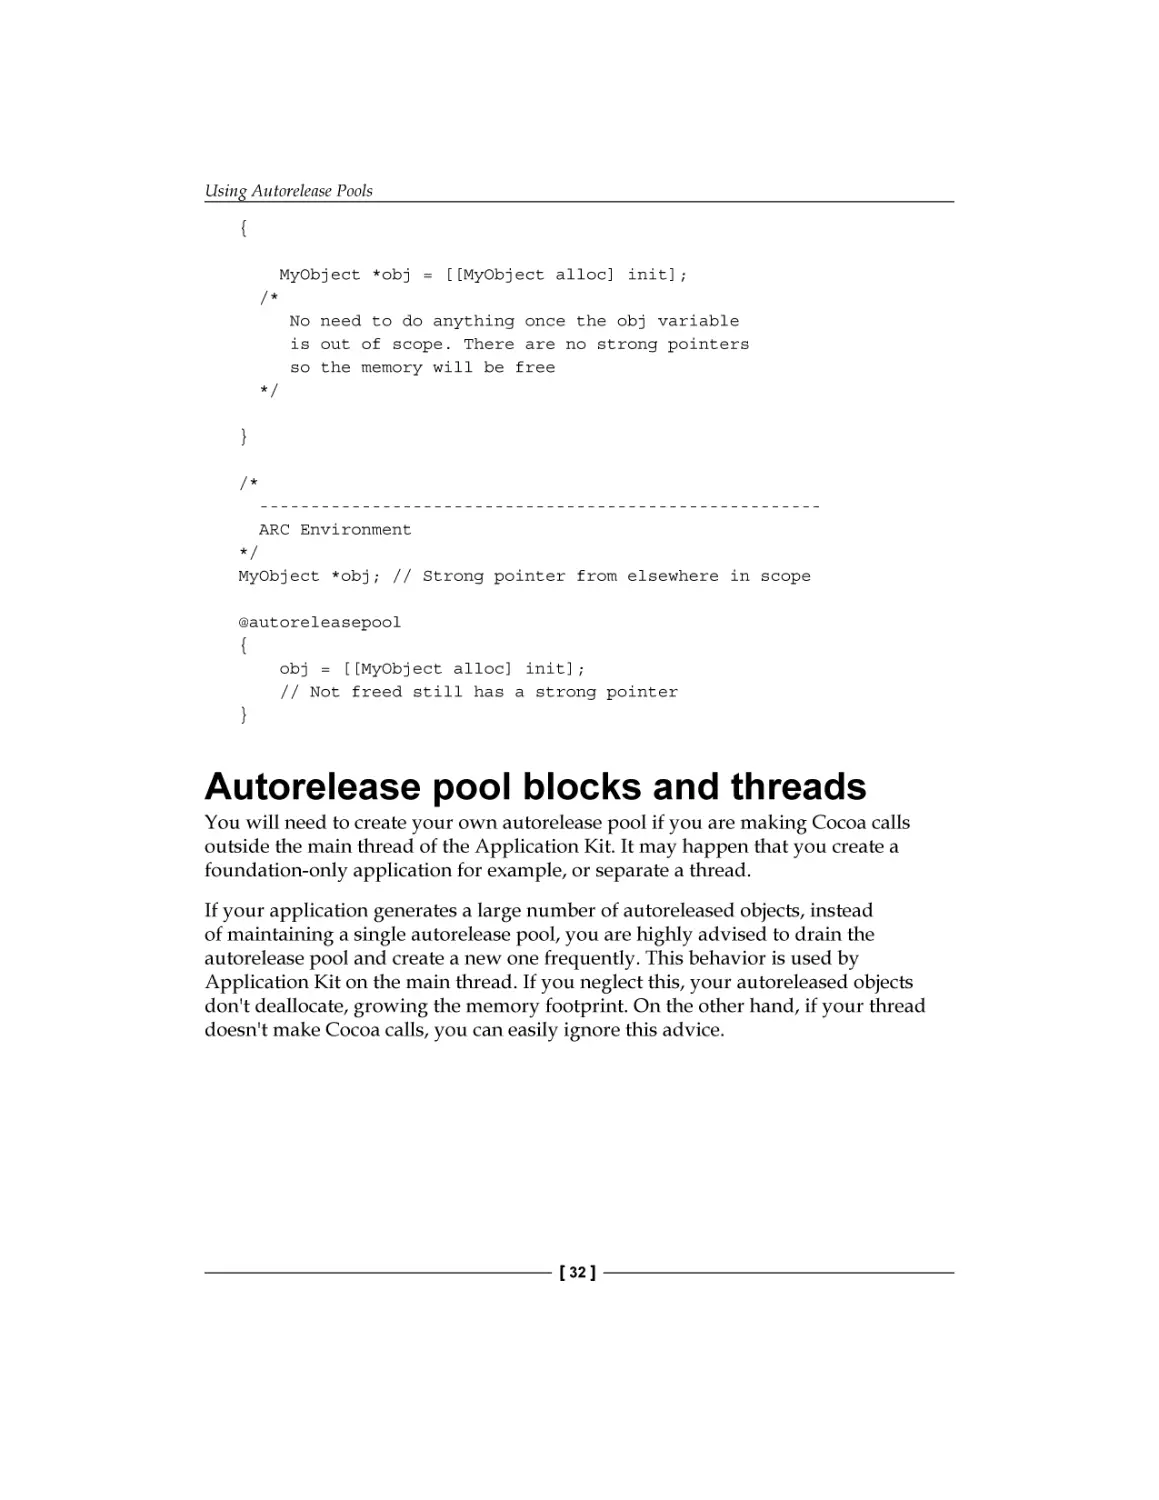 Autorelease pool blocks and threads